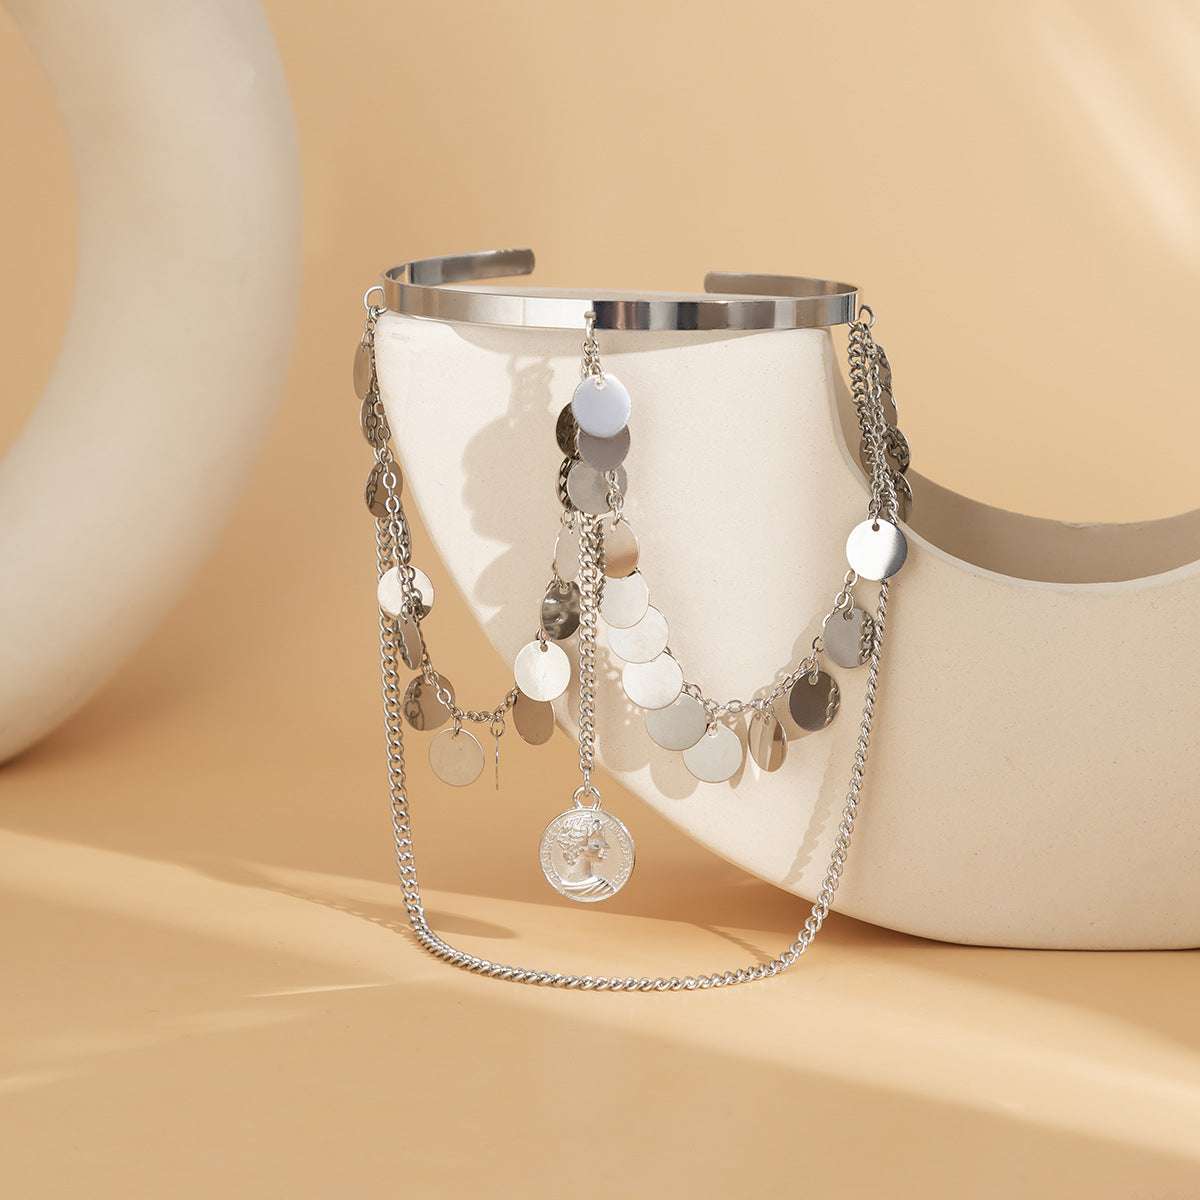 Fashion Arm Bracelet, Sparkling Arm Jewelry, Women's Arm Bracelet - available at Sparq Mart